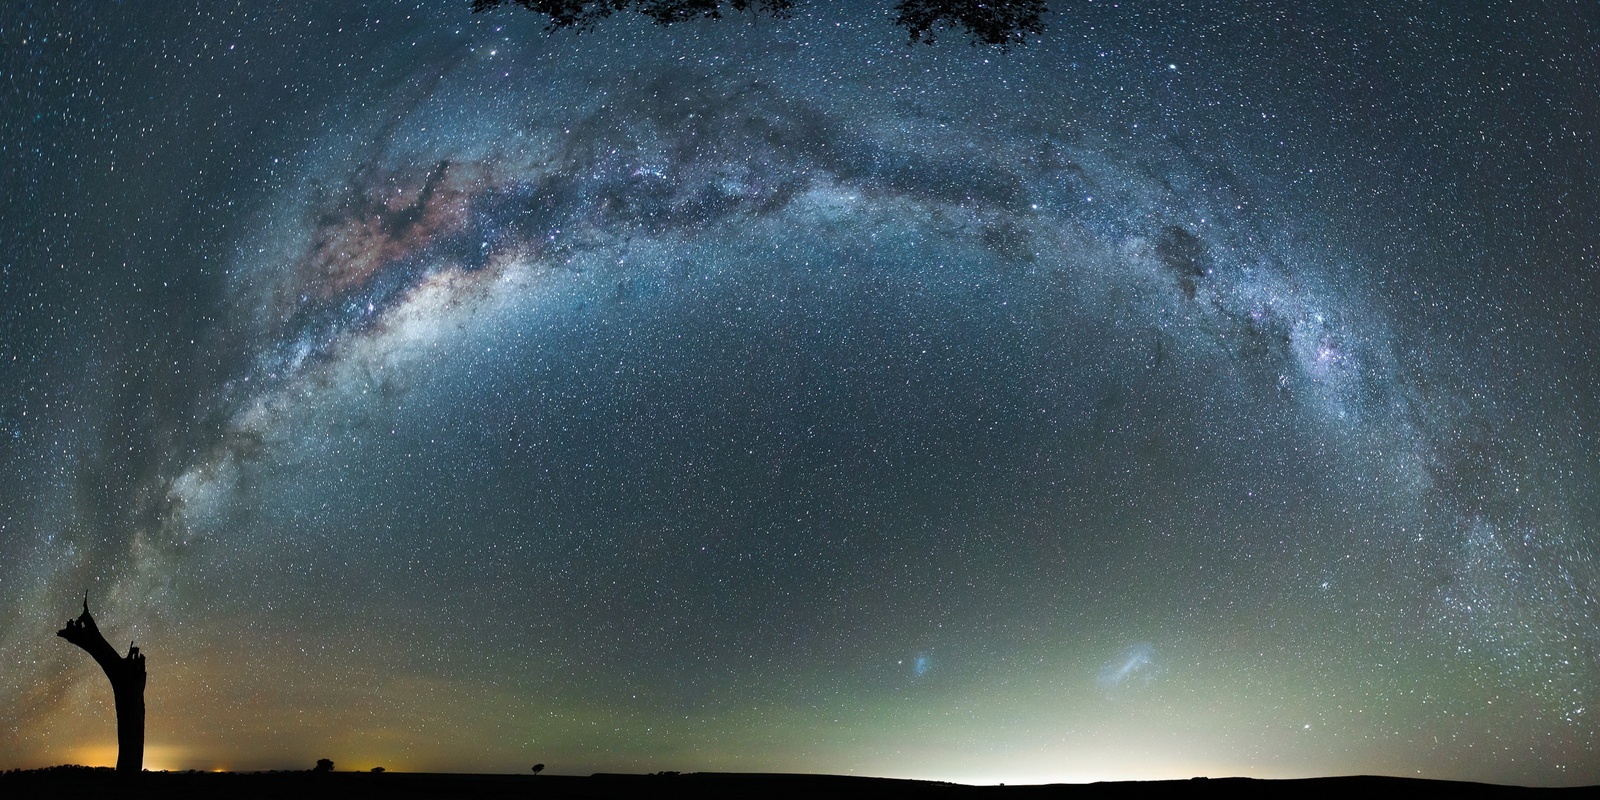 NAIDOC Planetarium - Aboriginal Stories in the Stars at Mona Vale